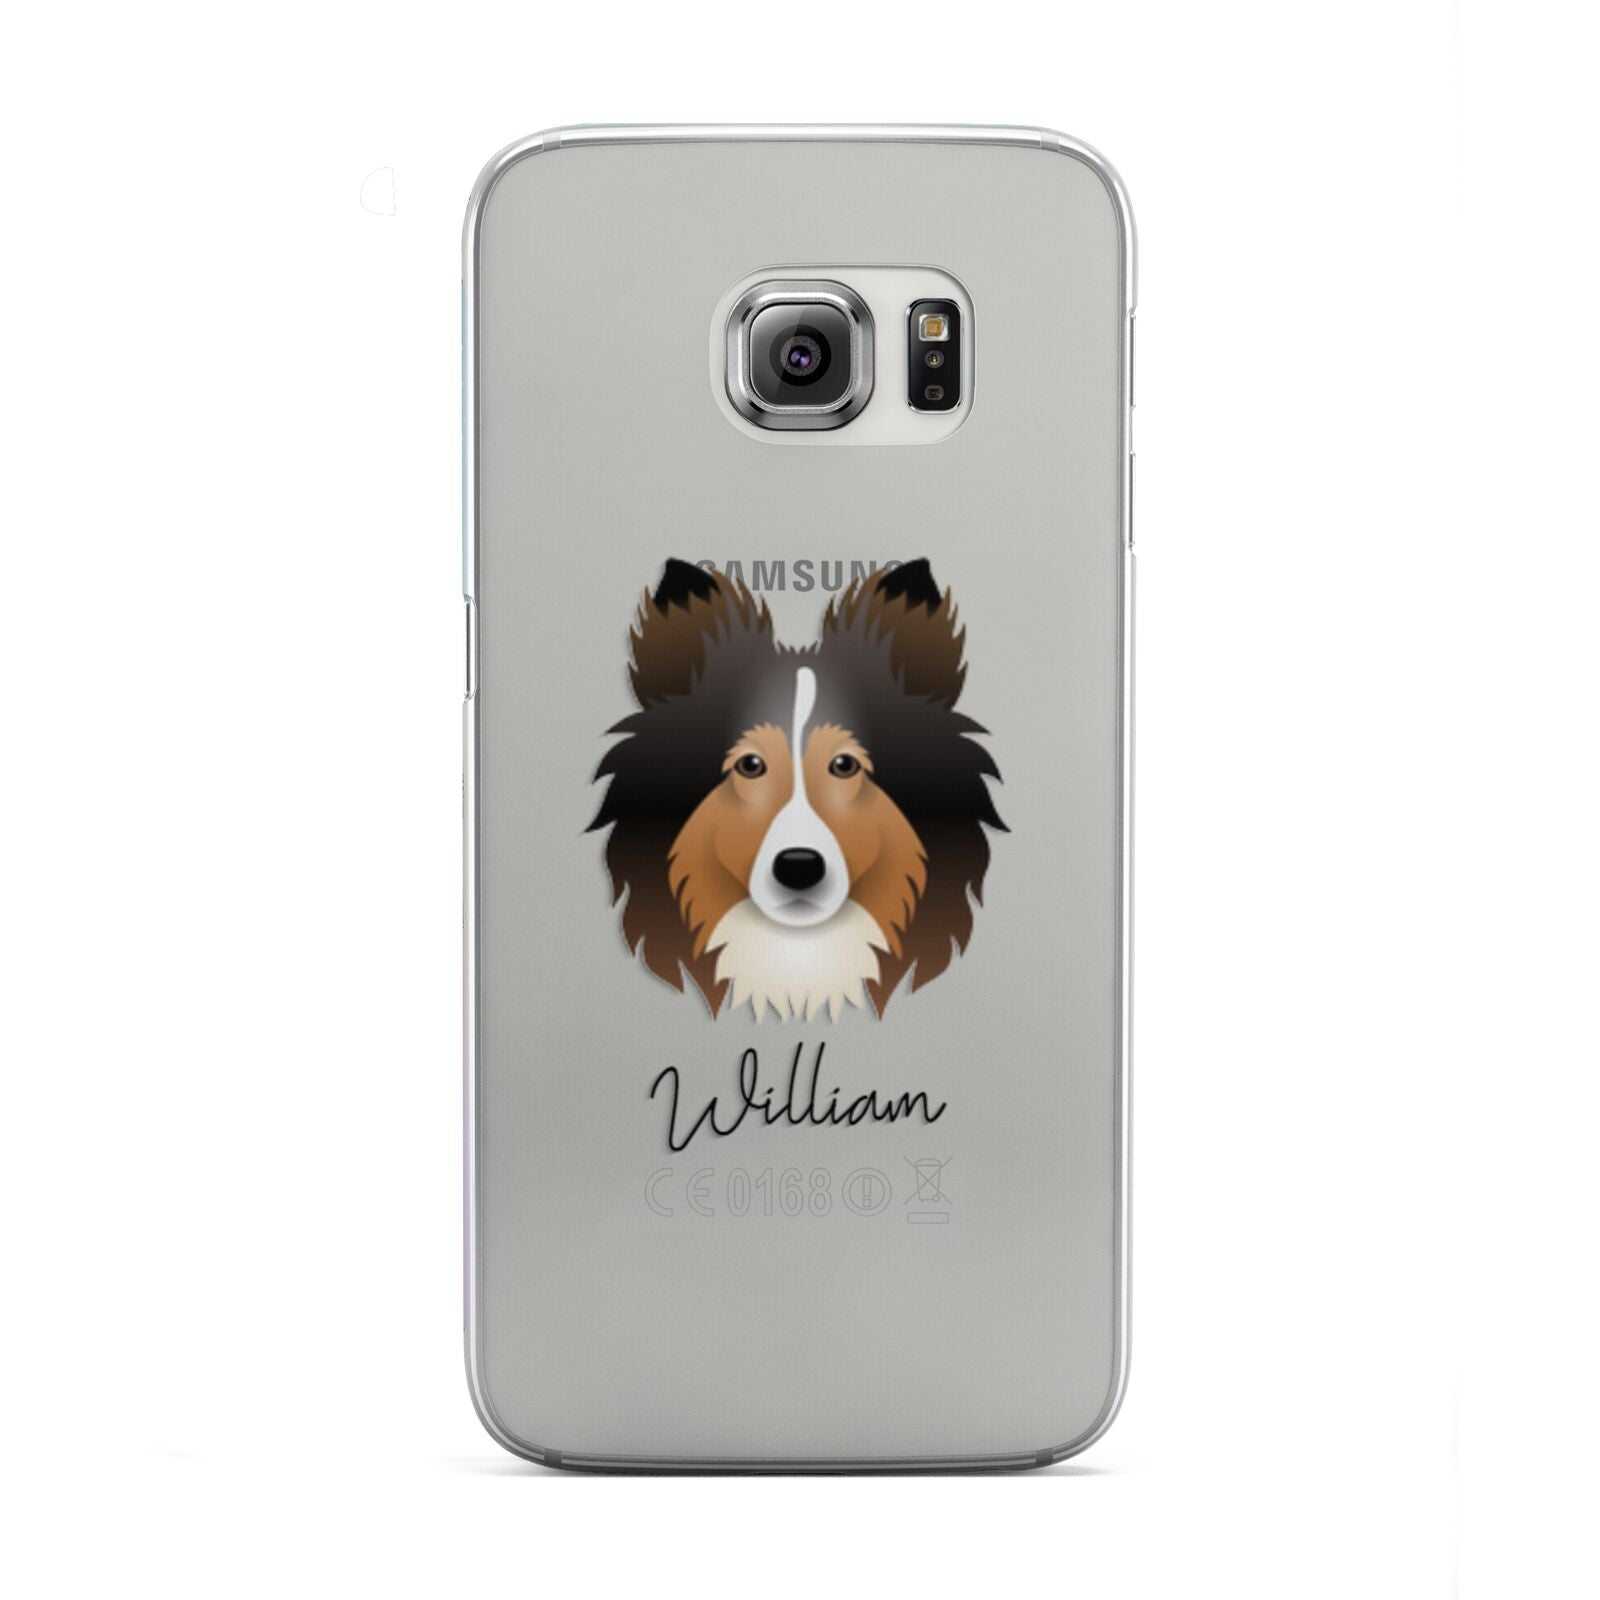 Shetland Sheepdog Personalised Samsung Galaxy S6 Edge Case